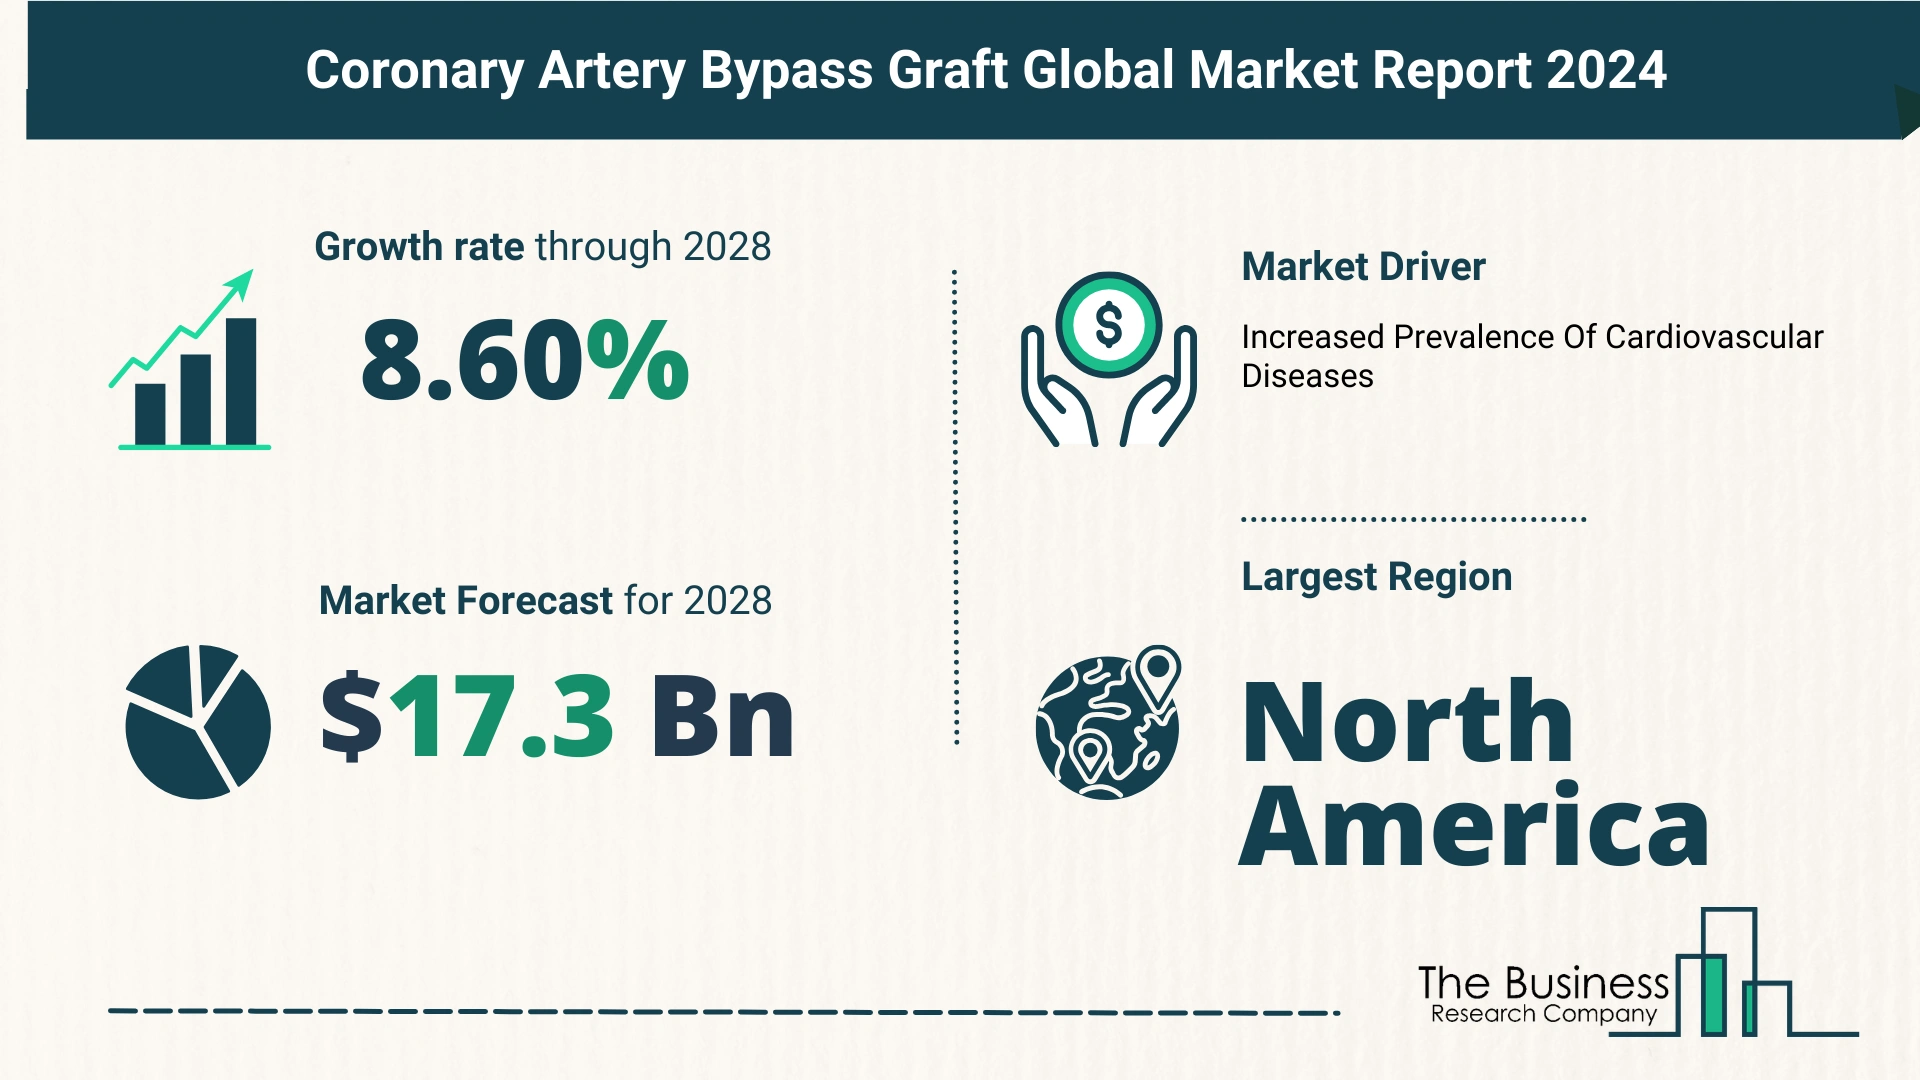 Global Coronary Artery Bypass Graft Market Size